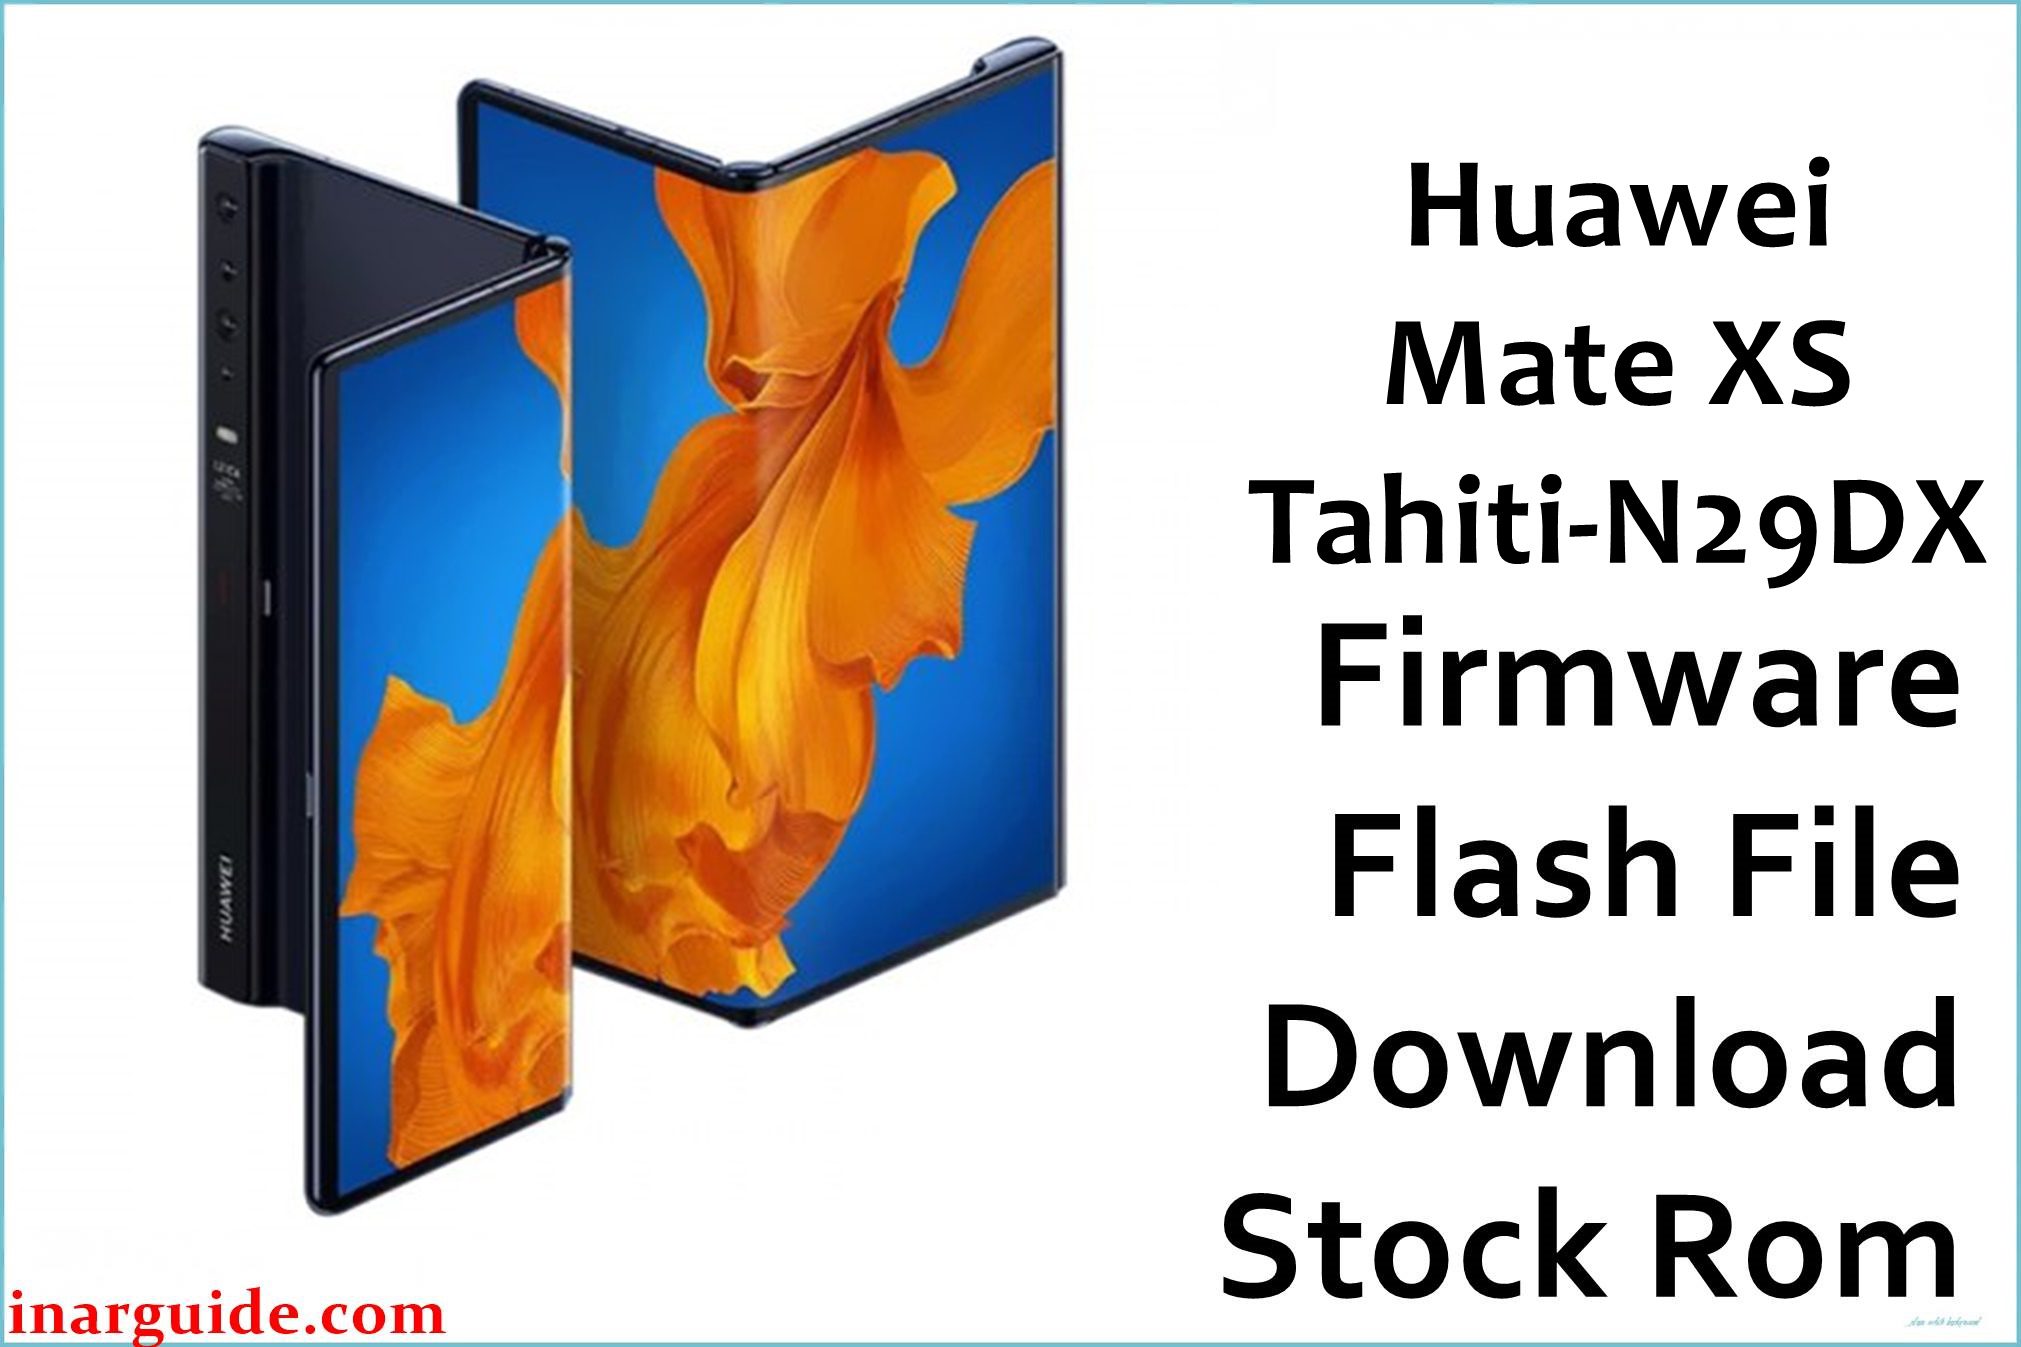 Huawei Mate XS Tahiti N29DX